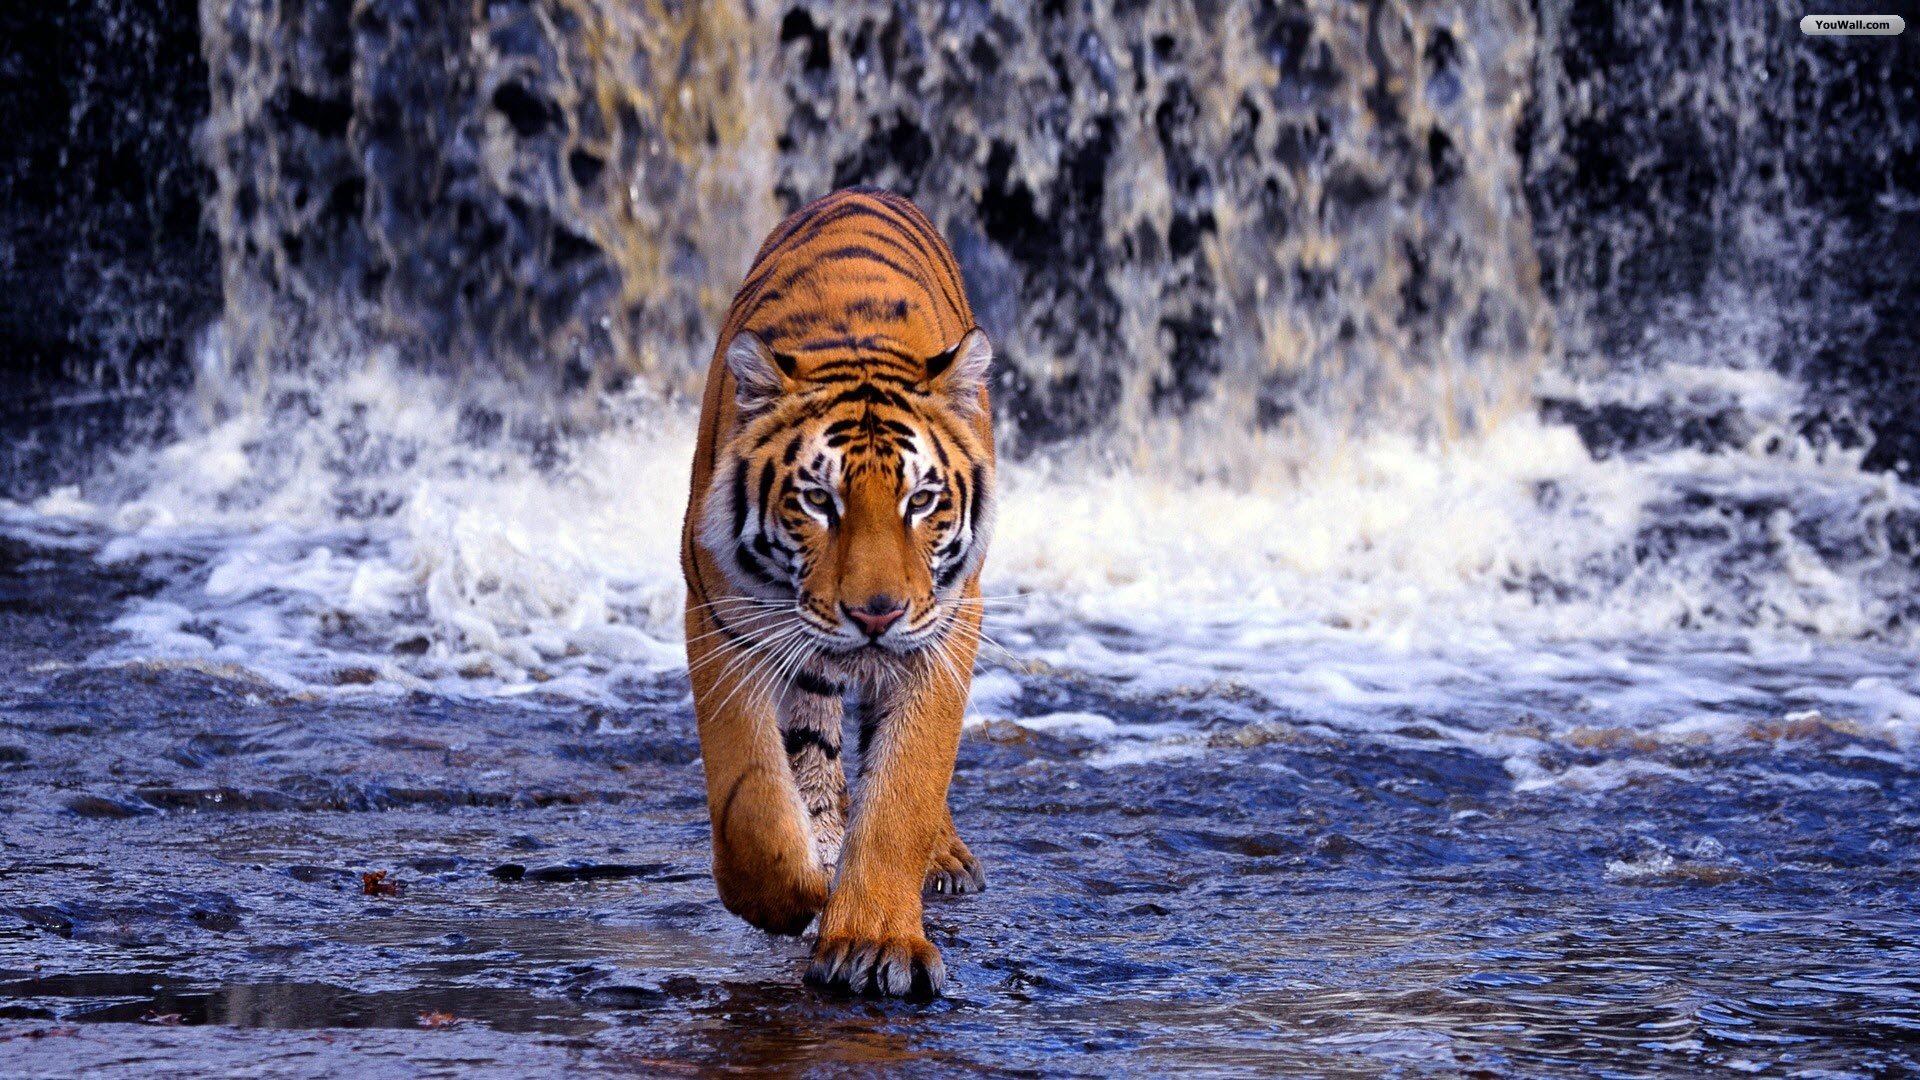 Tiger and Waterfall Wallpaper   wallpaperwallpapersfree wallpaper